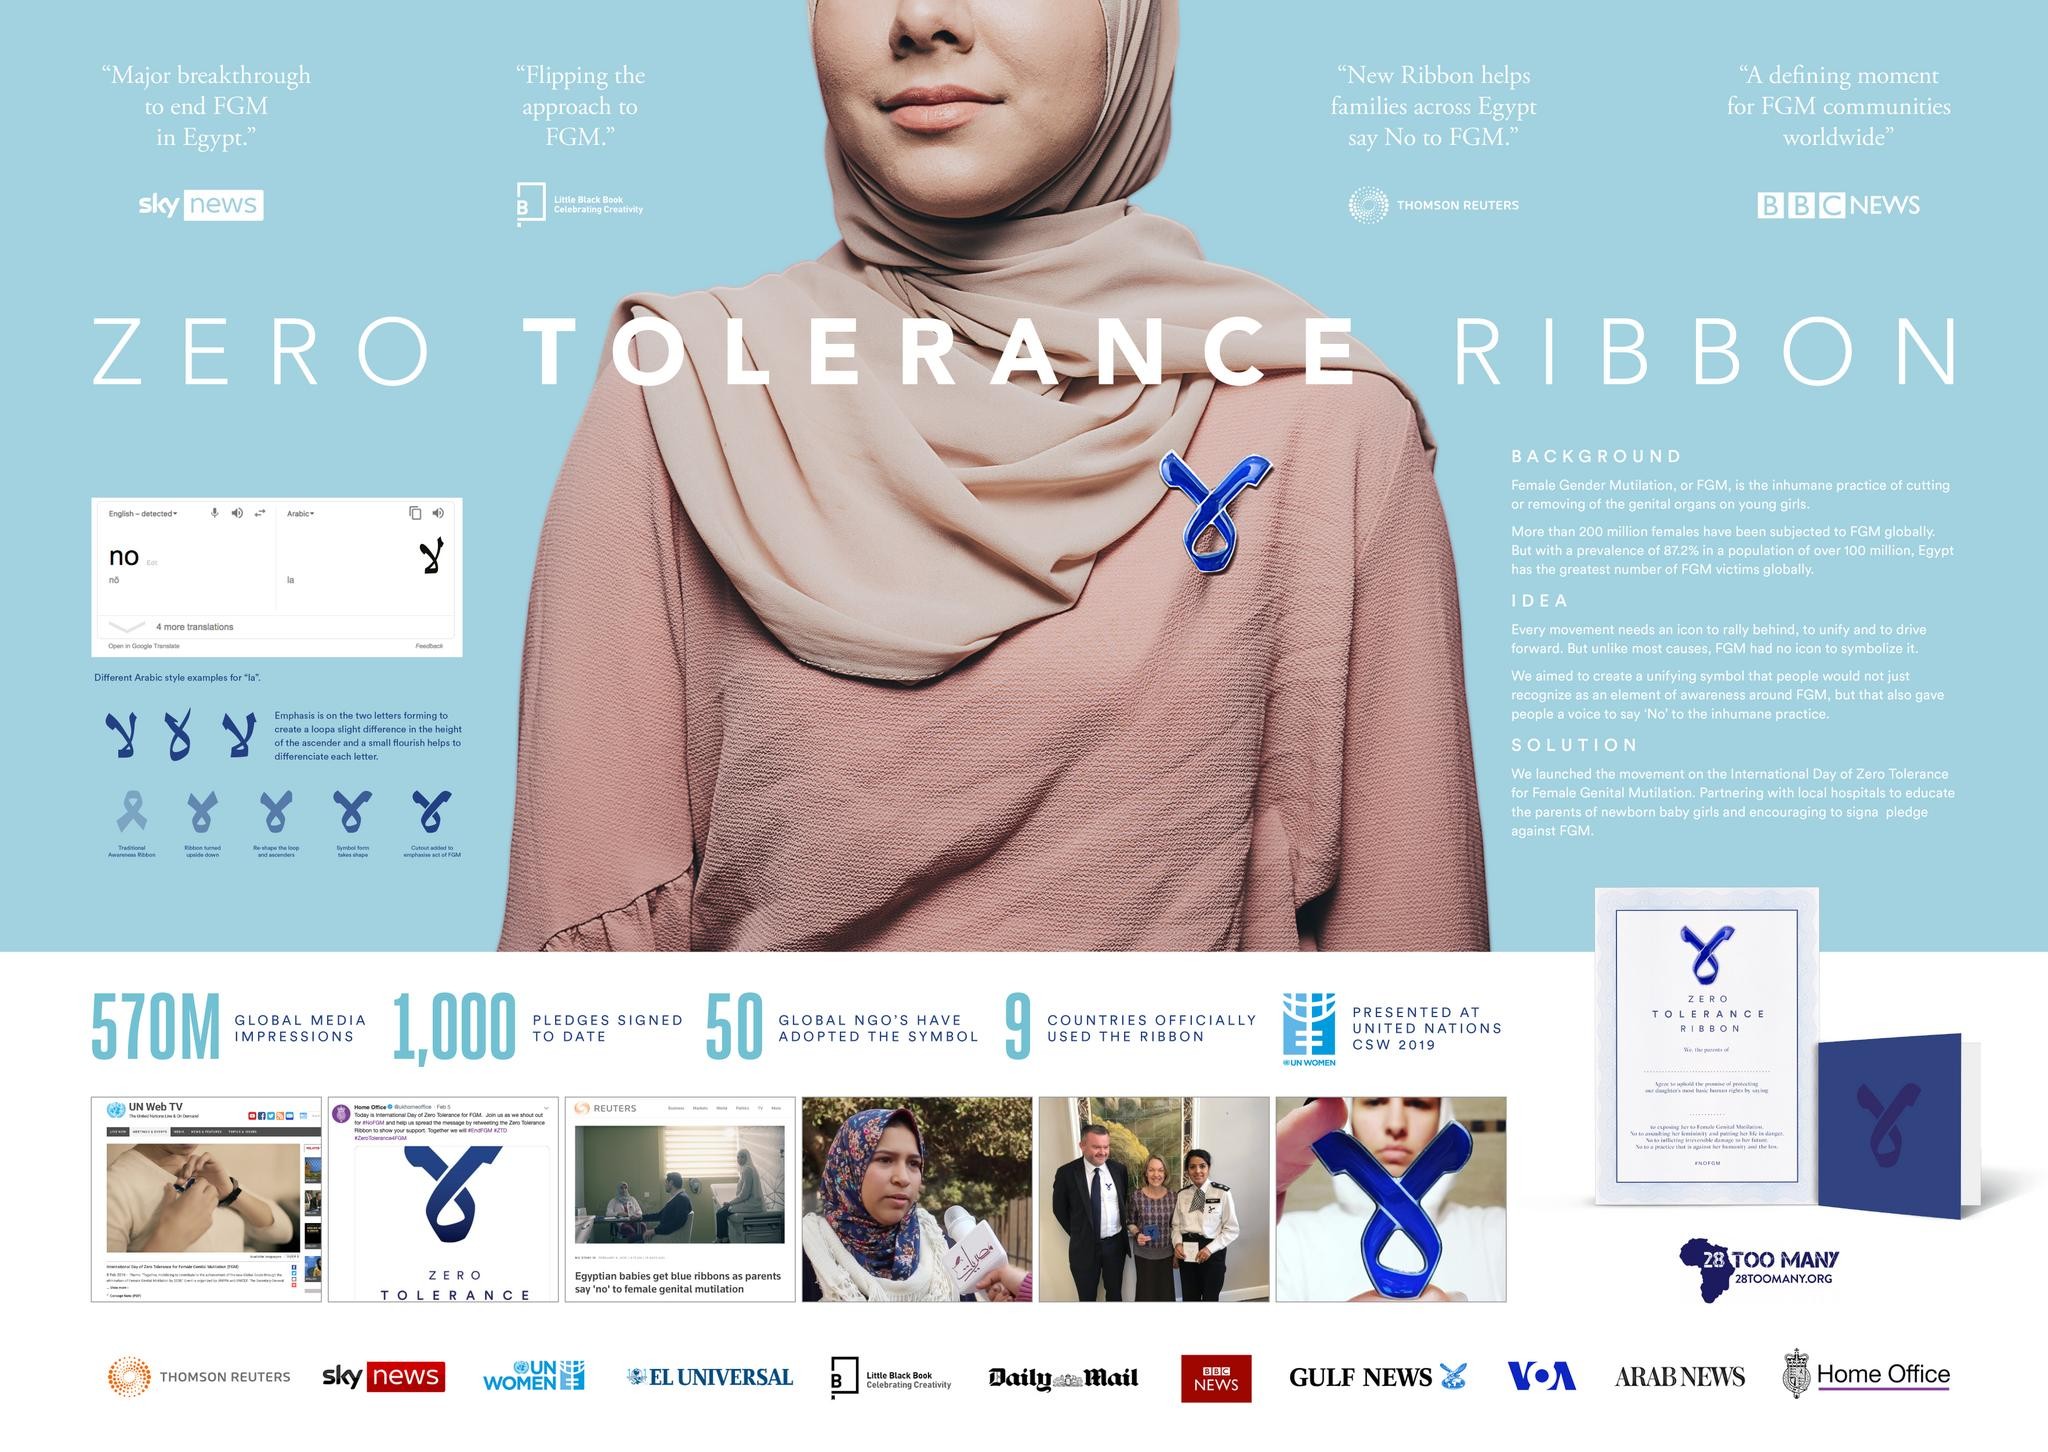 The Zero Tolerance Ribbon